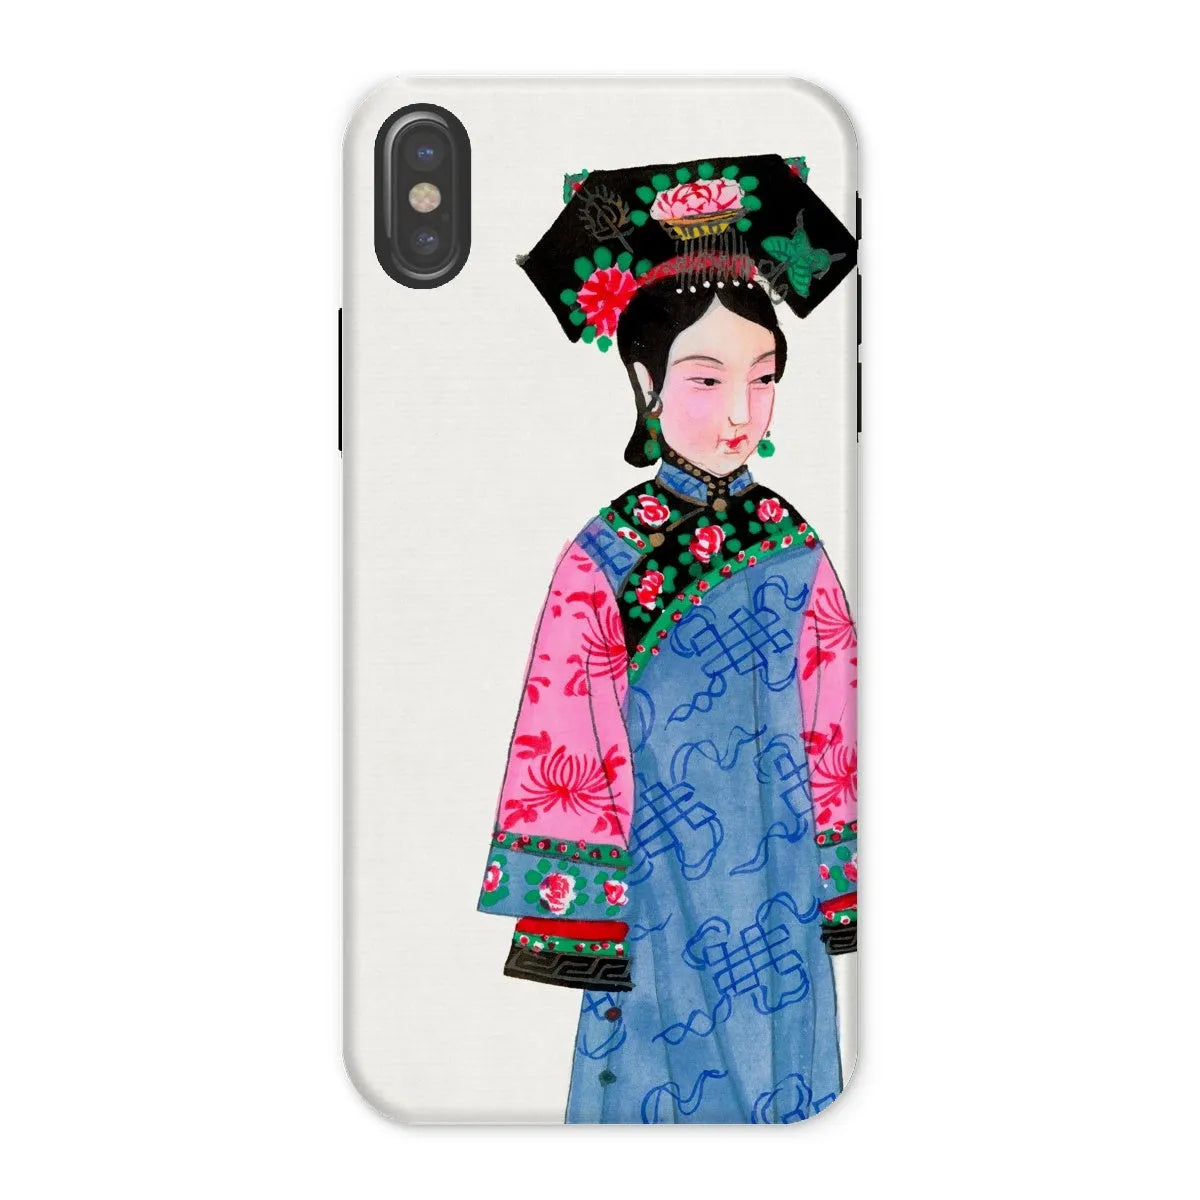 Noblewoman Too - Manchu Aesthetic Art Phone Case - Iphone x / Matte - Mobile Phone Cases - Aesthetic Art